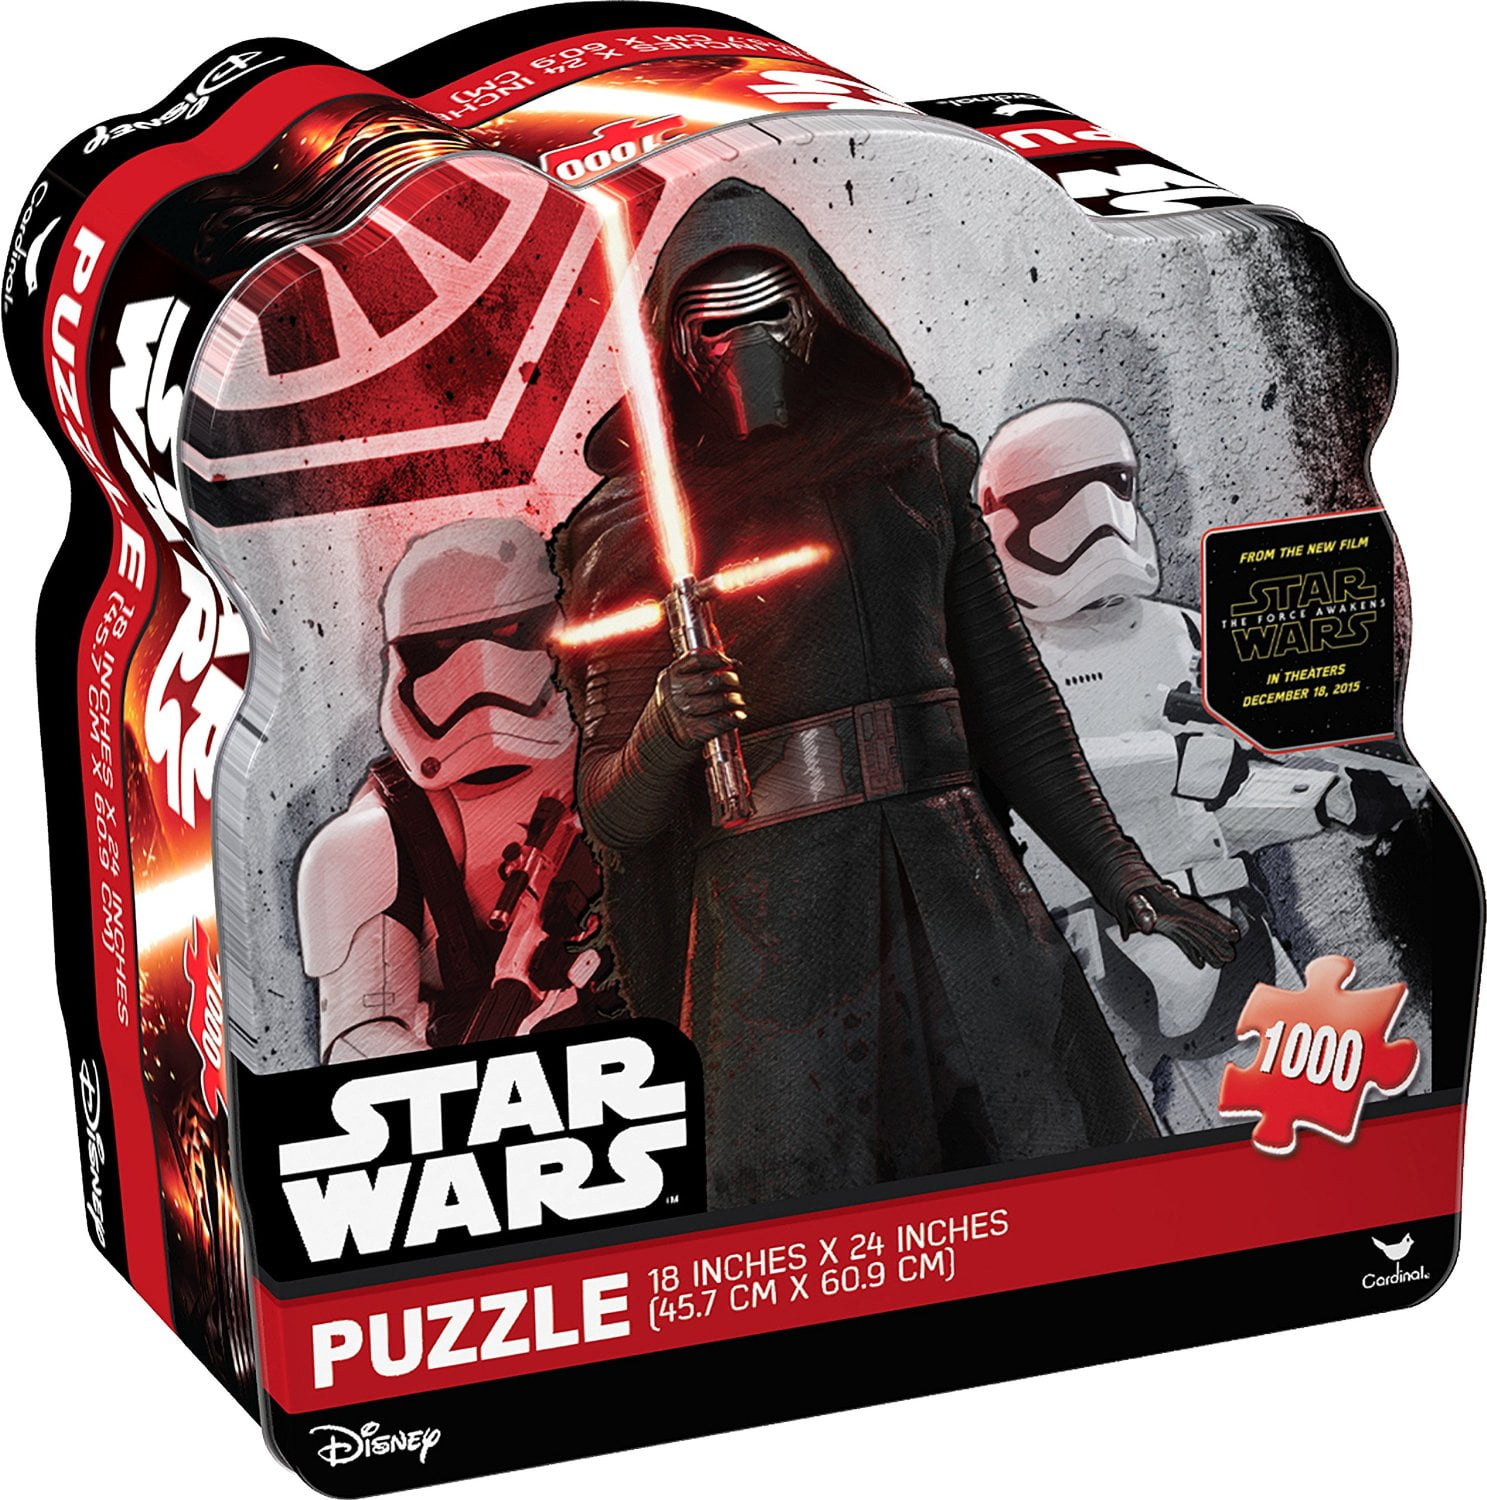 Darth Vader Puzzles